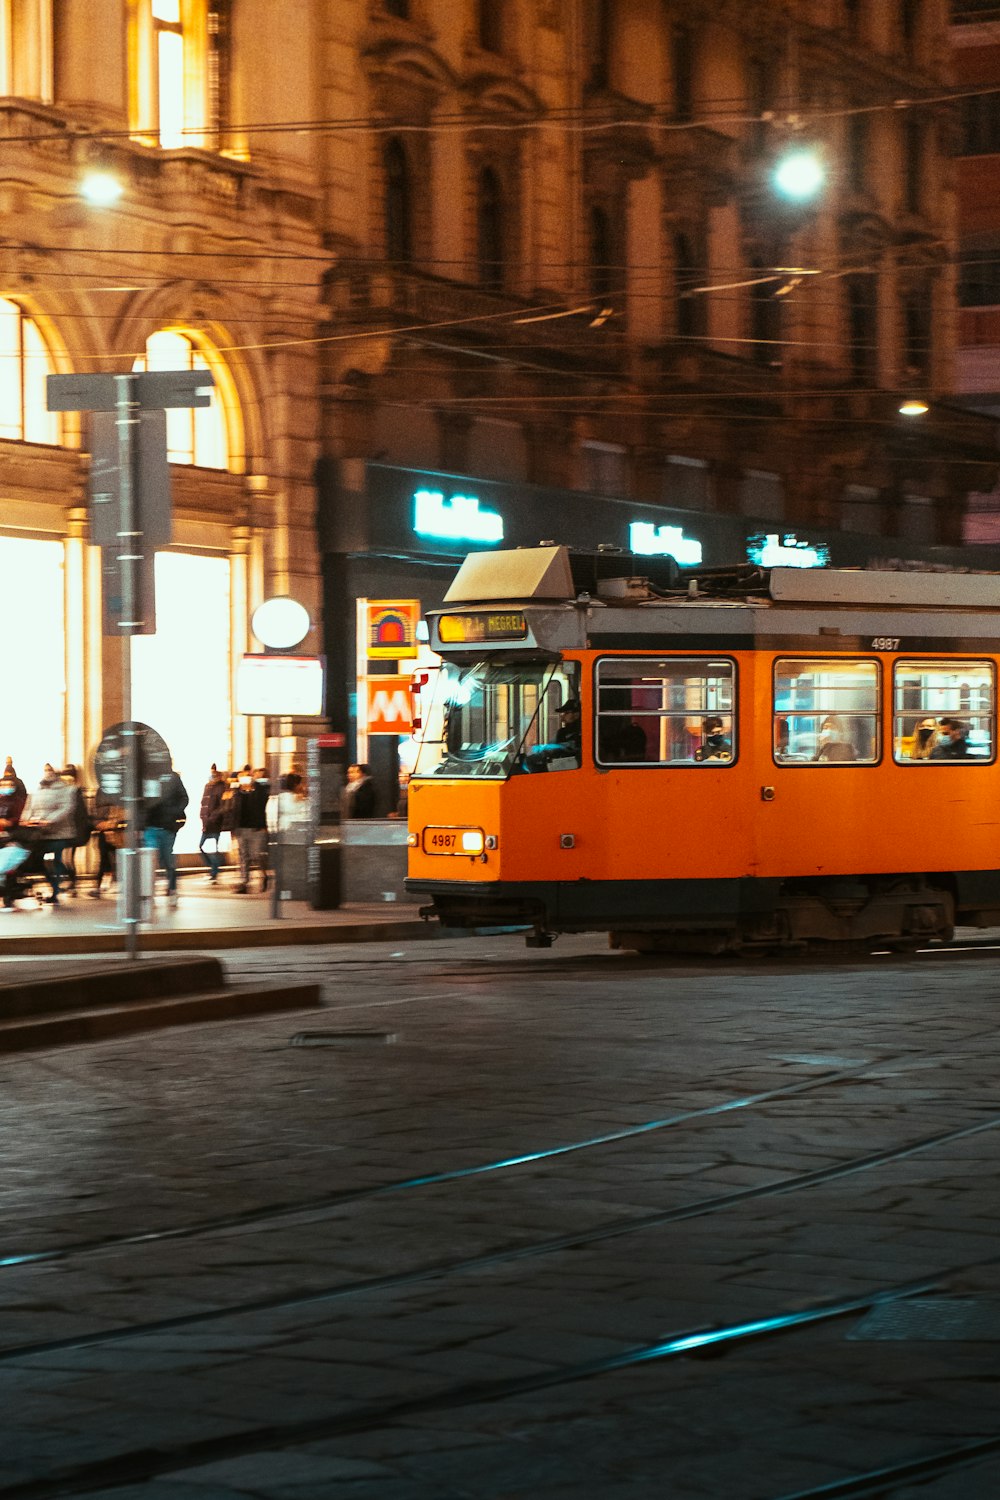 an orange trolley car on a city street at night